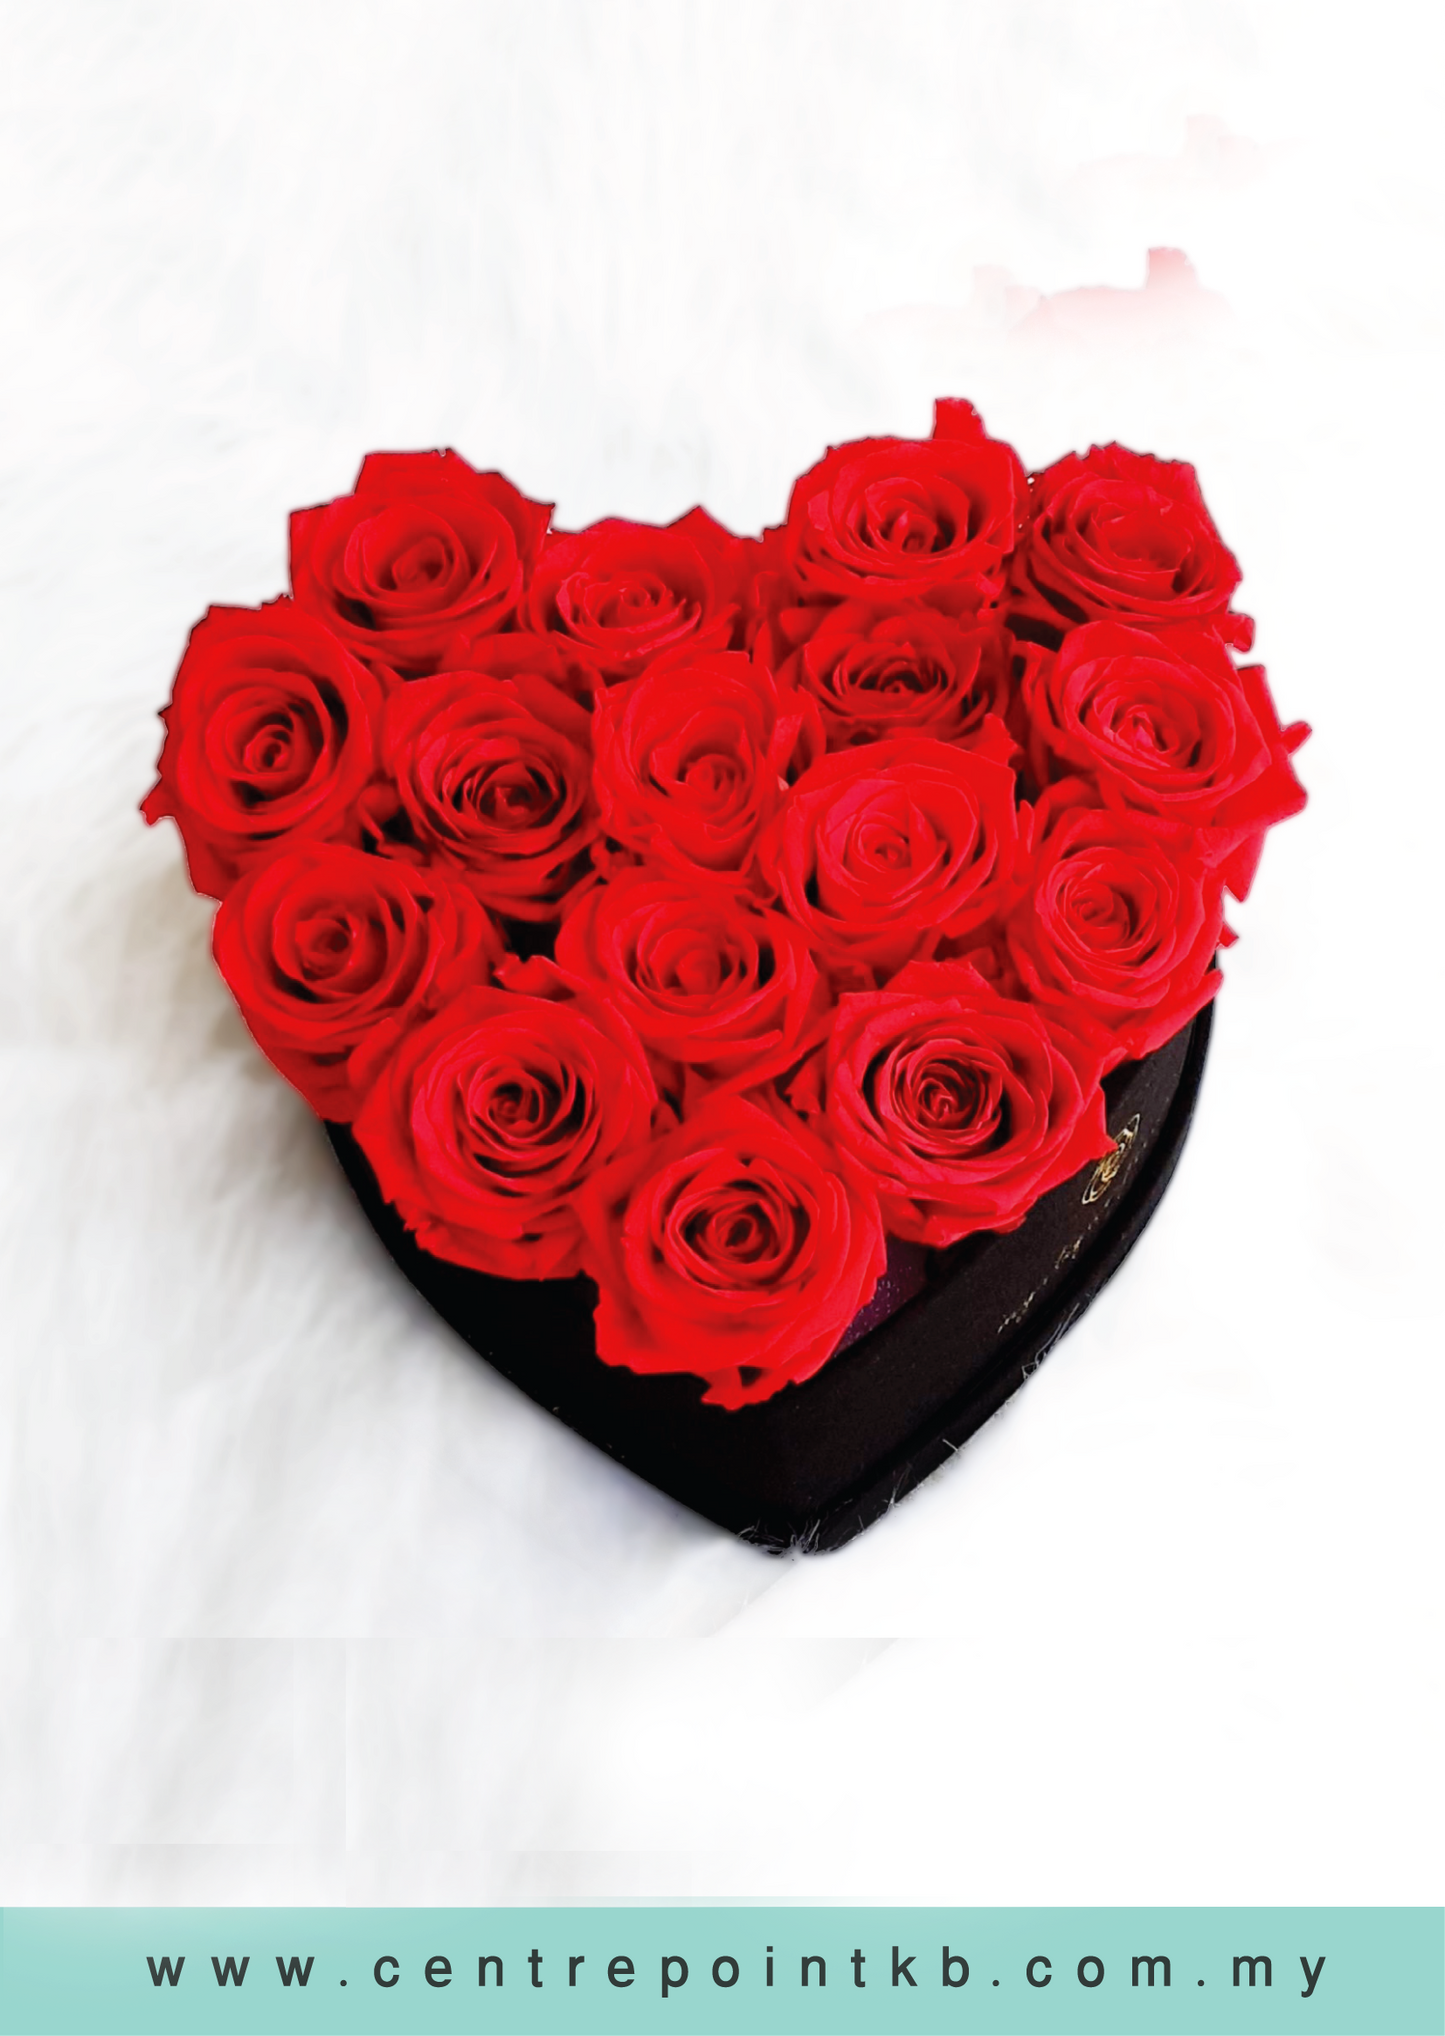 Heart Roses (RM 150.00)